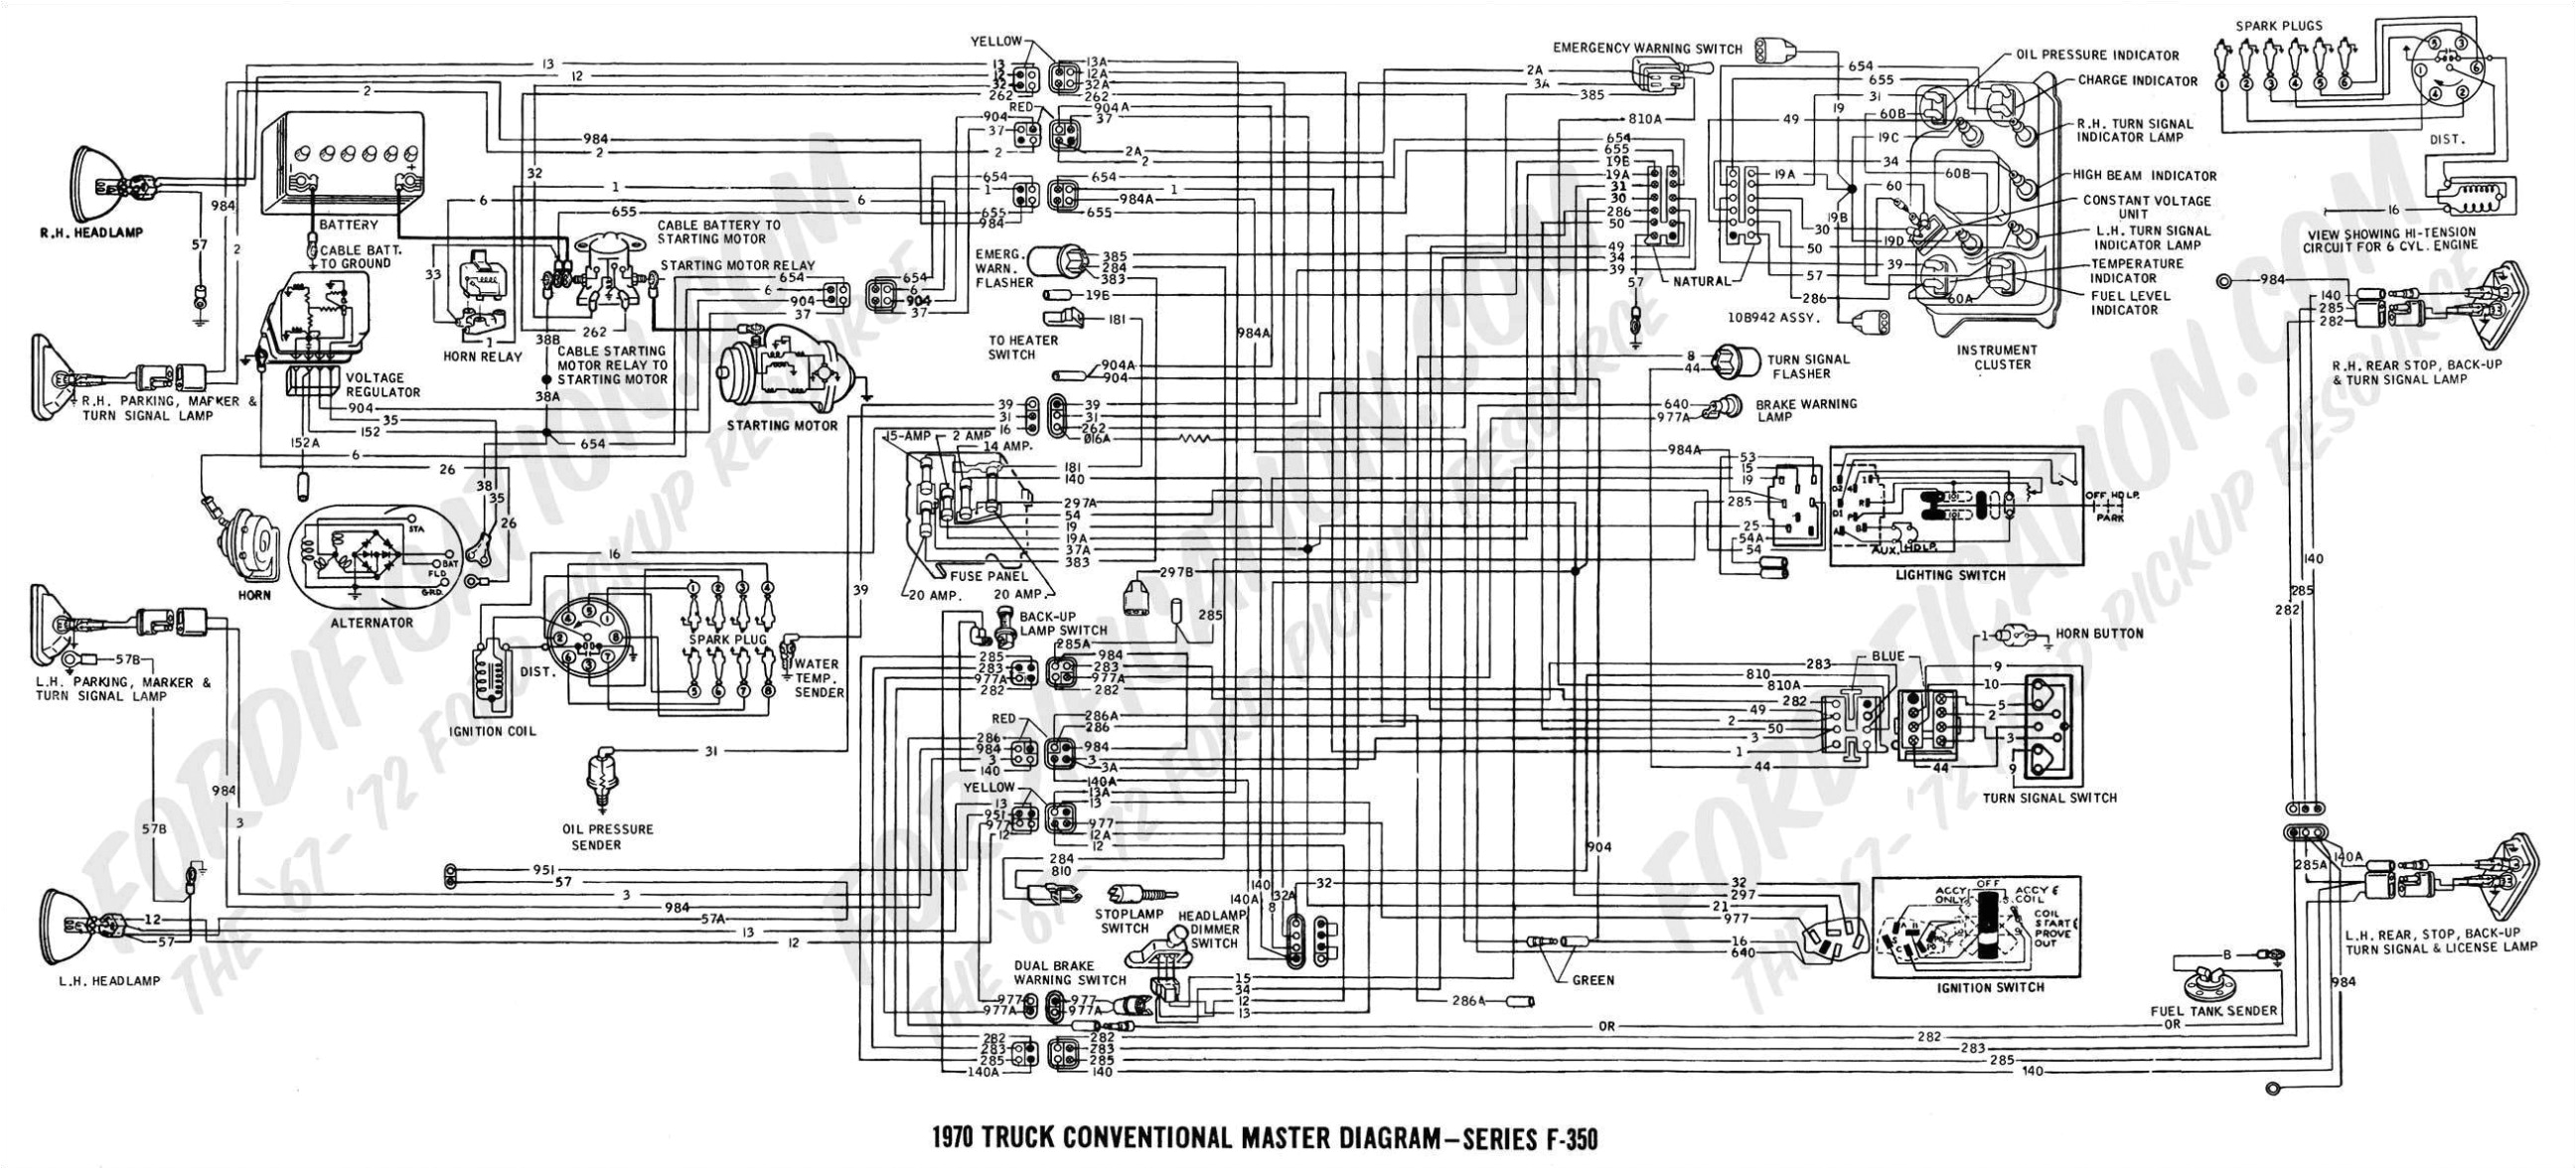 2001 ford ranger wiper motor wiring diagram wiring diagram today 2001 ford explorer rear wiper wiring diagram 2001 ford wiper diagram